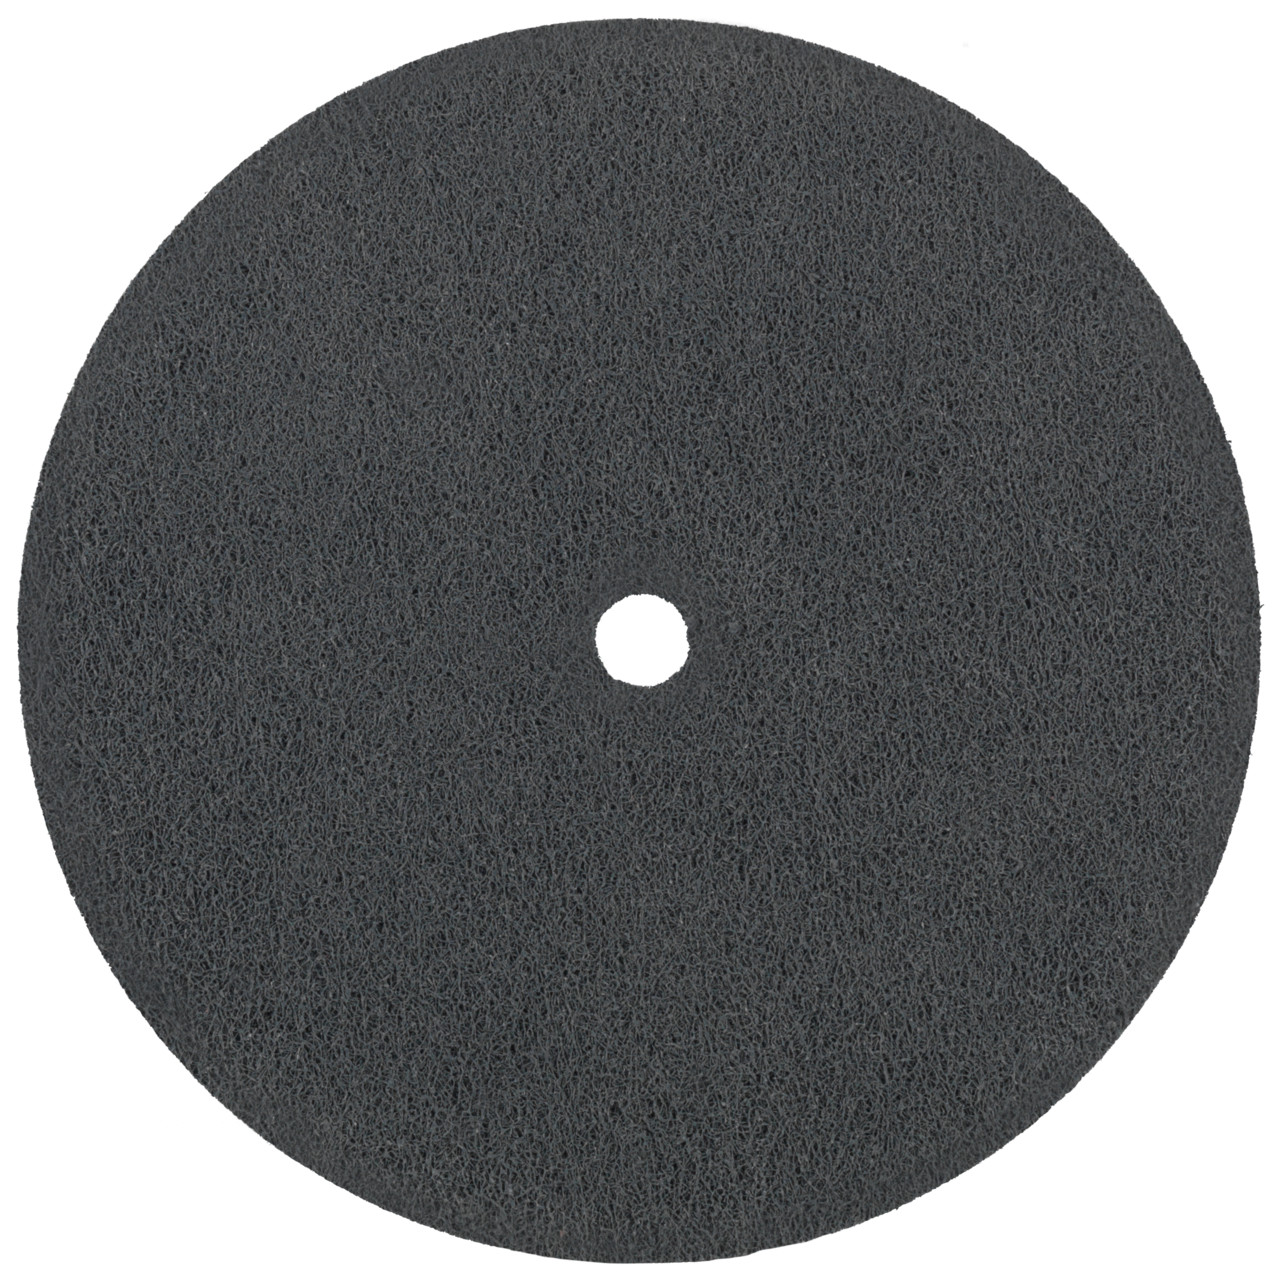 Tyrolit Discos compactos prensados DxDxH 152x25x25,4 Inserto universal, 2 C FEIN, forma: 1, Art. 34190305